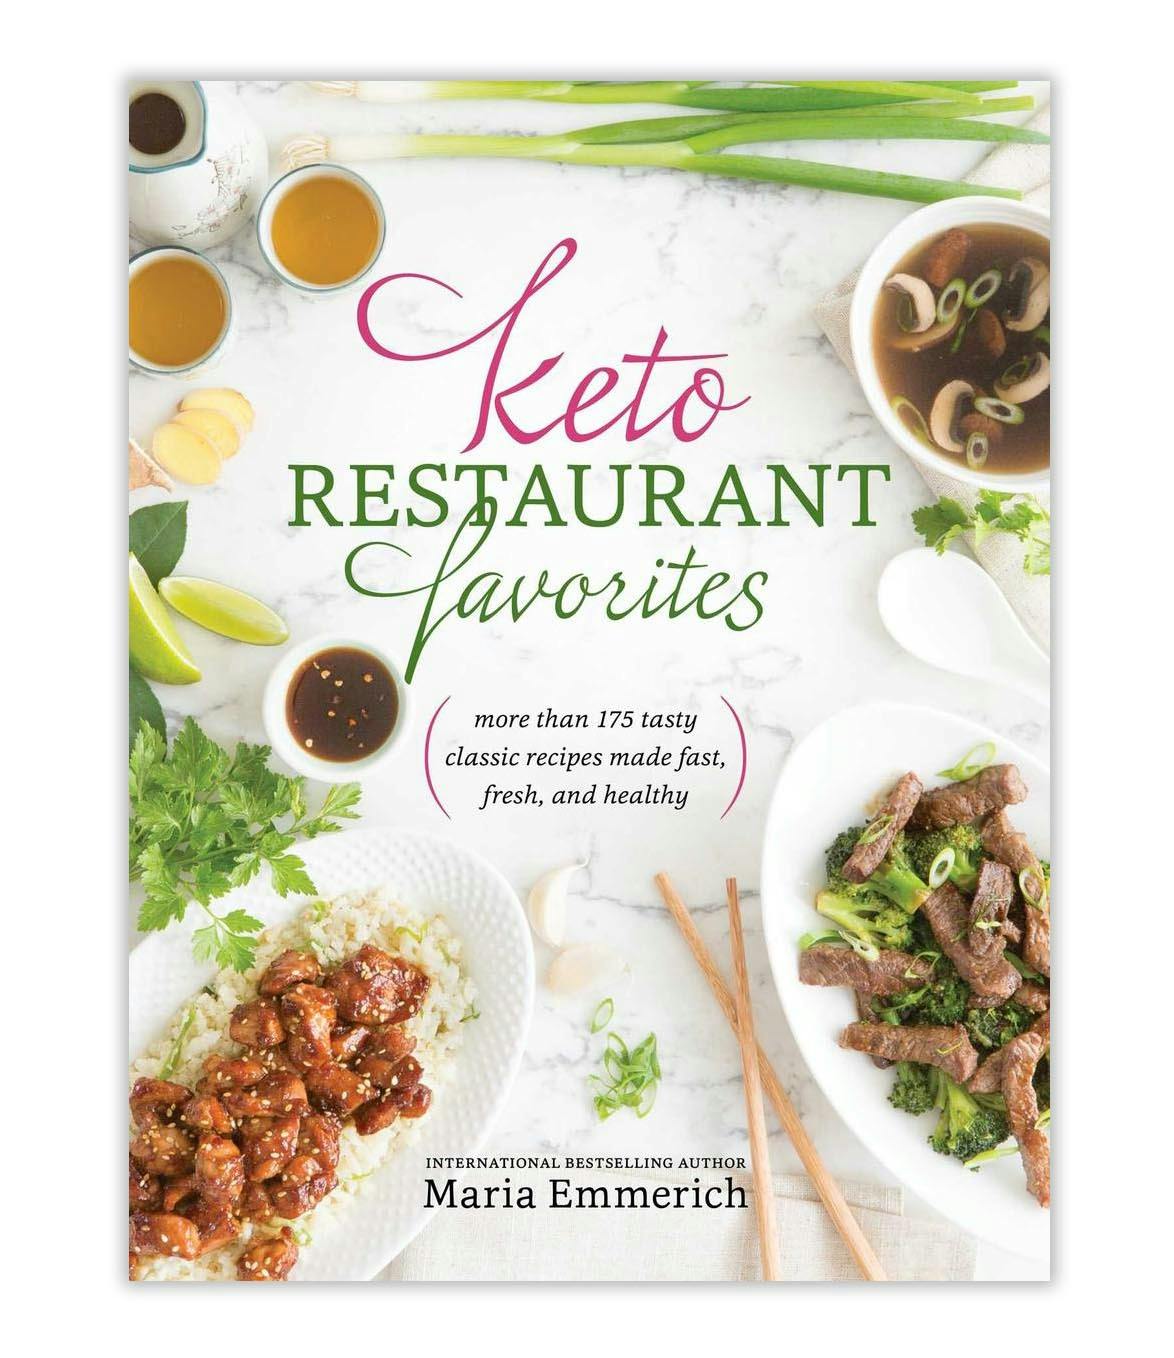 'Keto Restaurant Favorites' review